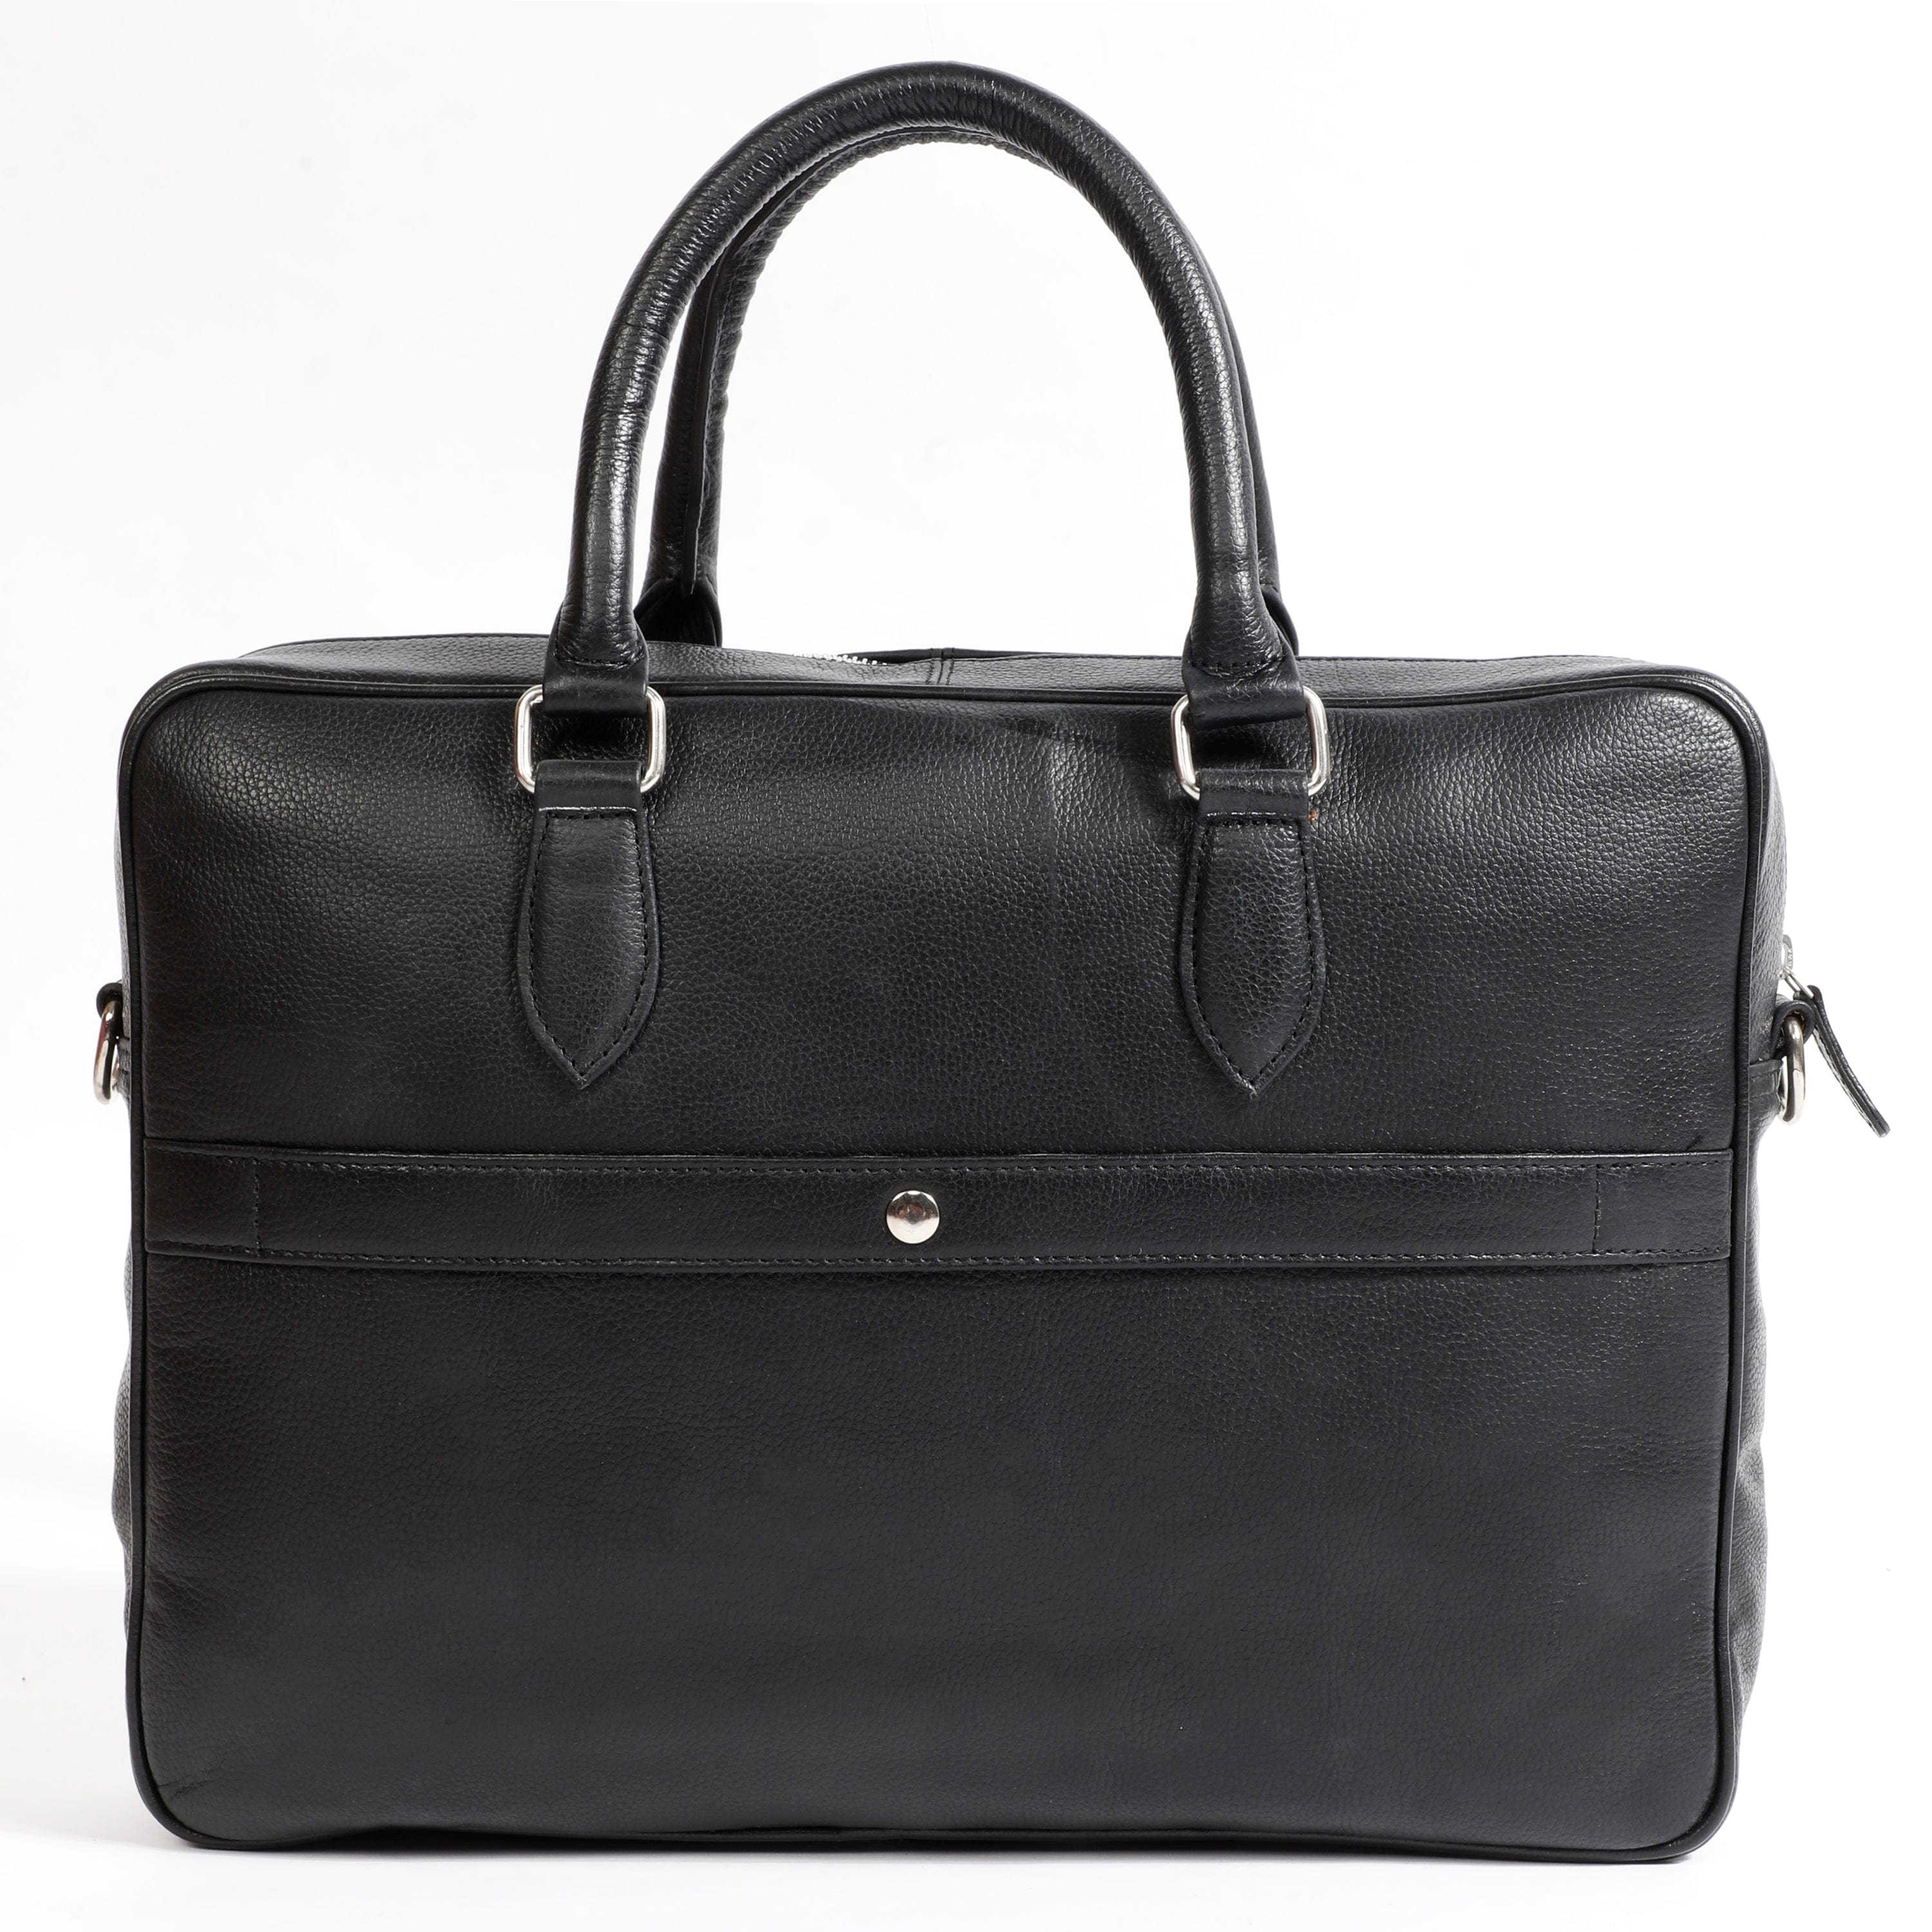 leather bag pattern, messenger bag pattern, bag sewing pattern, pdf,  download